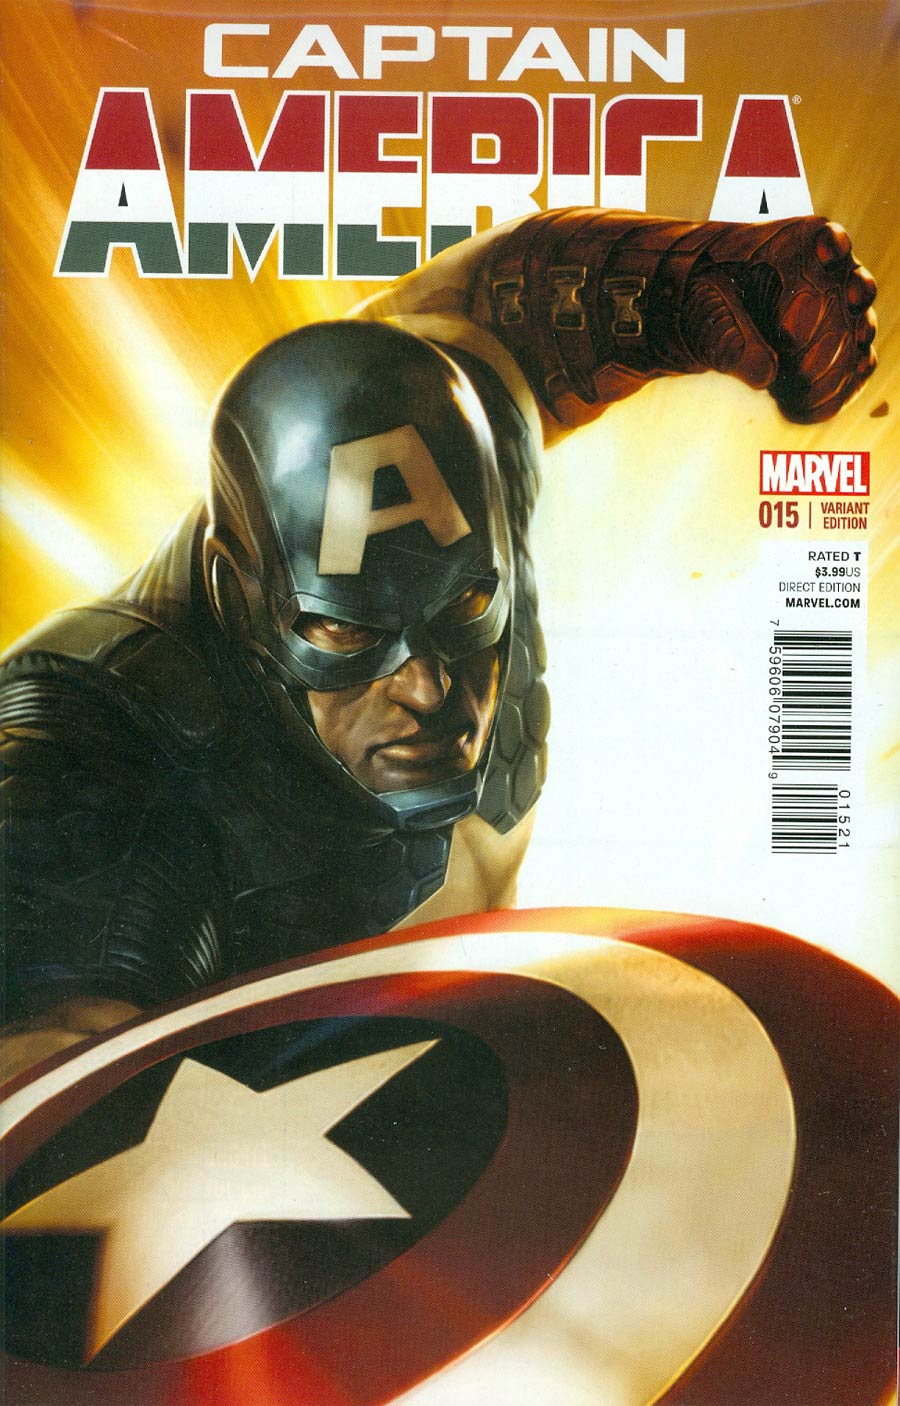 Captain America Vol 7 #15 Cover B Incentive Francesco Mattina Variant Cover